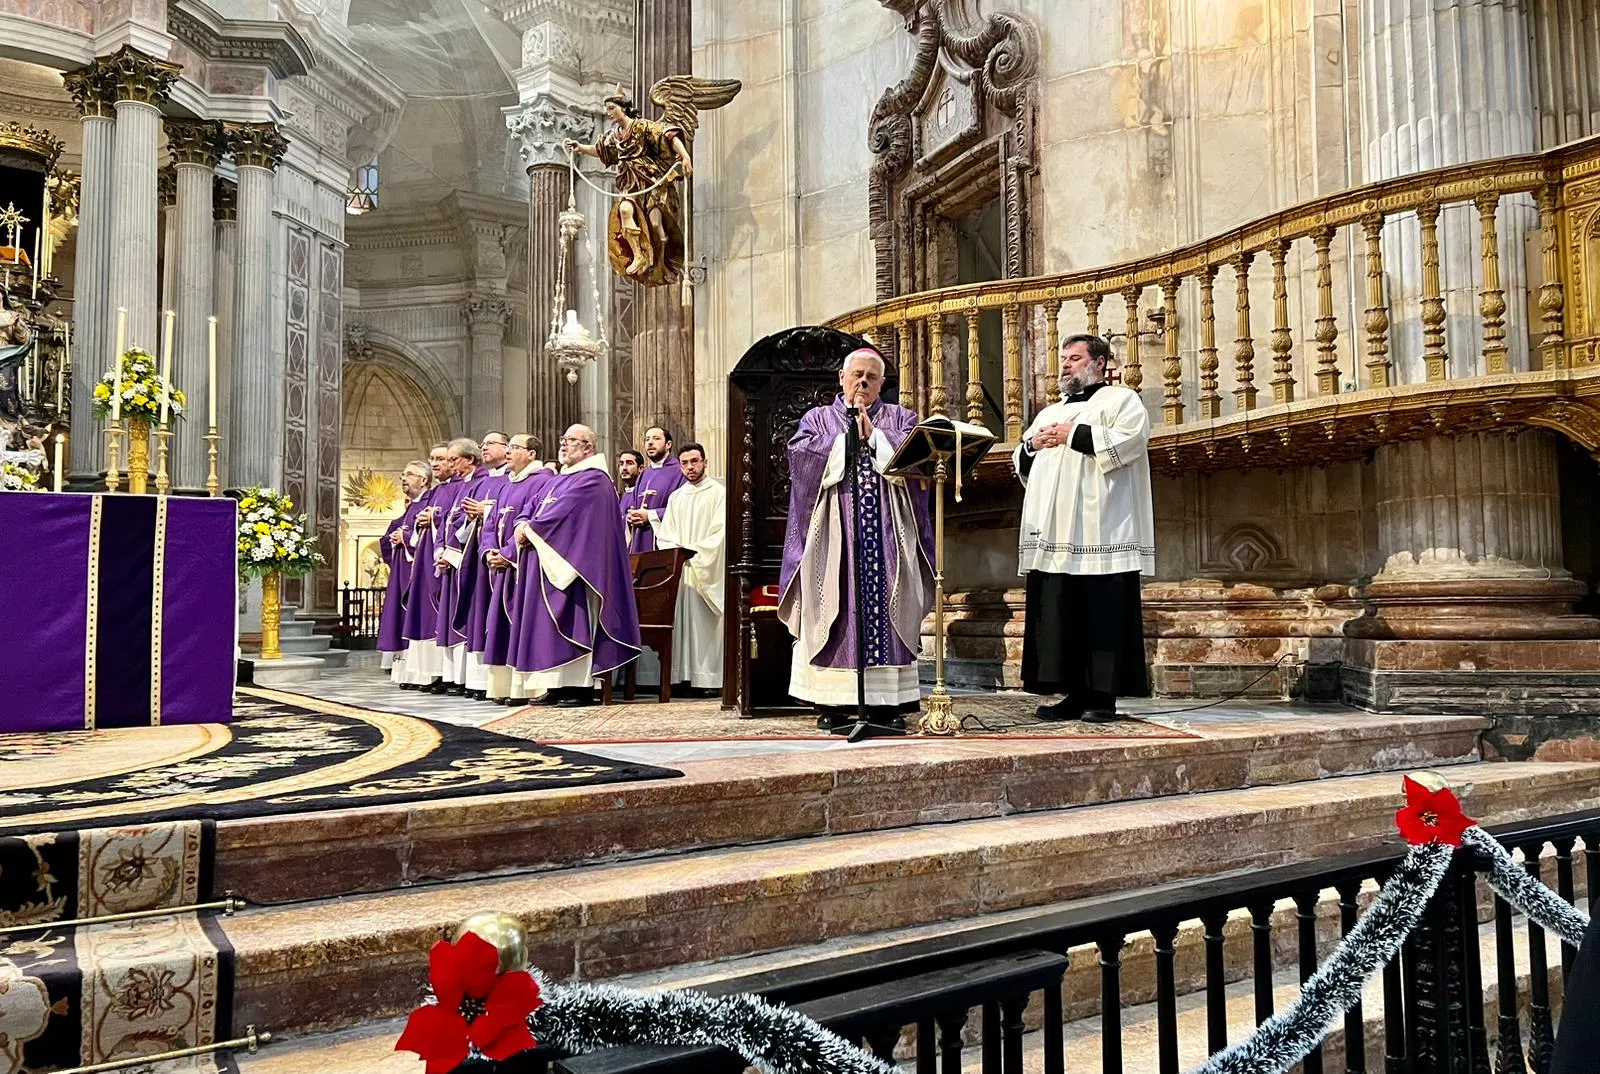 El obispo de la Diócesis de Cádiz y Ceuta, Rafael Zornoza Boy, ha sido el ancargado de presidir la ceremonia